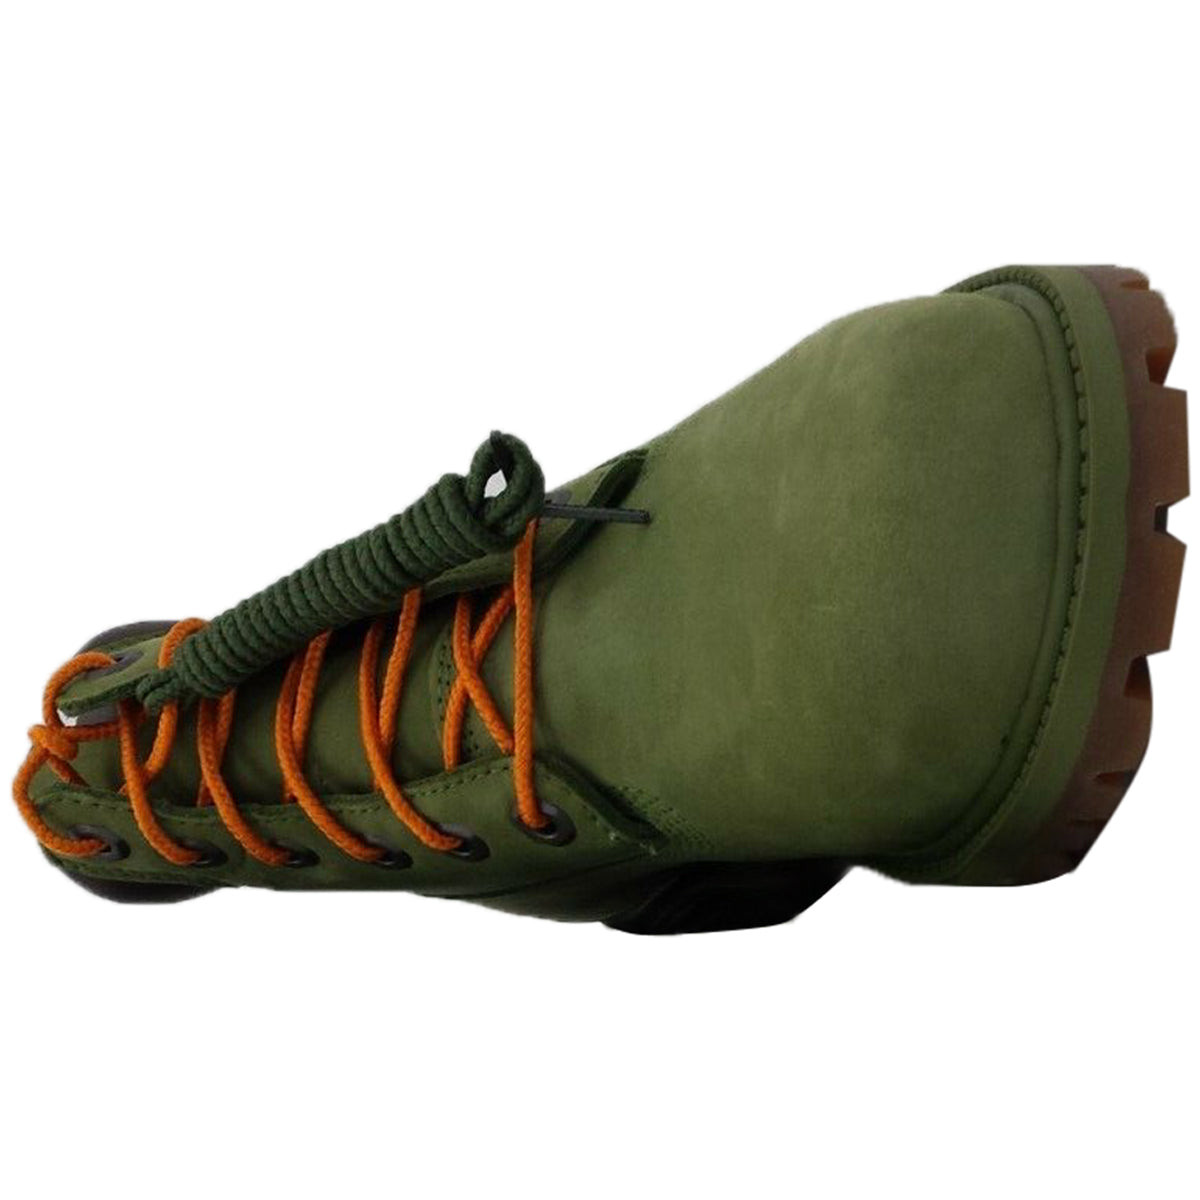 Timberland 6' Premium Boot Big Kids Style : Tb0a1mne